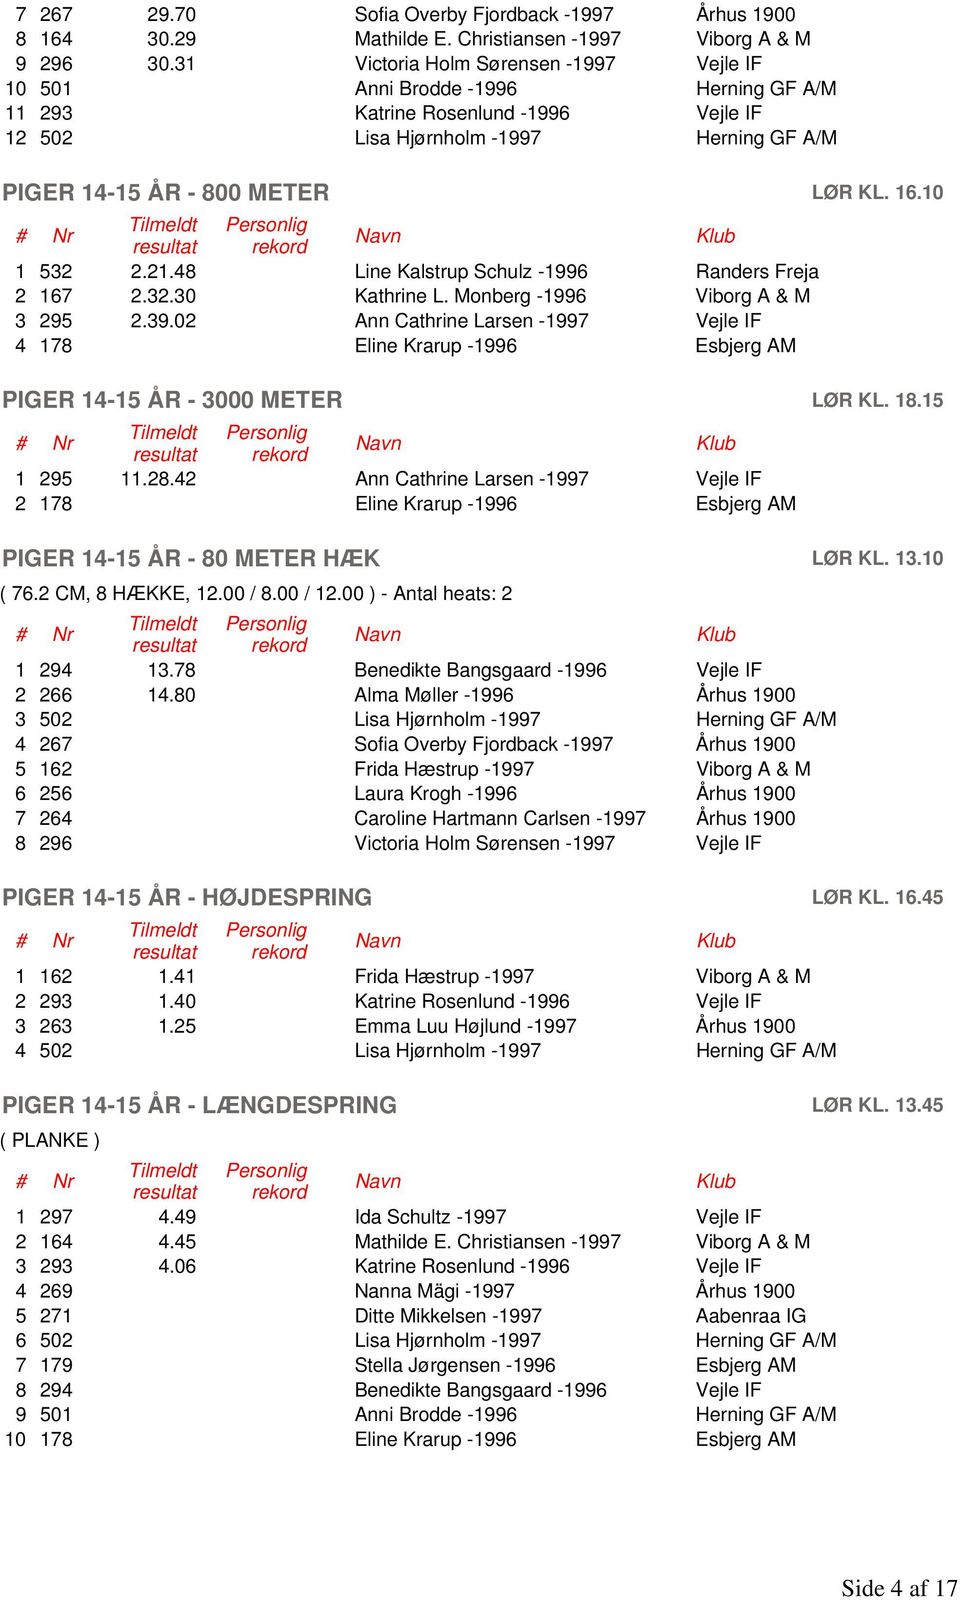 16.10 1 532 2.21.48 Line Kalstrup Schulz -1996 Randers Freja 2 167 2.32.30 Kathrine L. Monberg -1996 Viborg A & M 3 295 2.39.